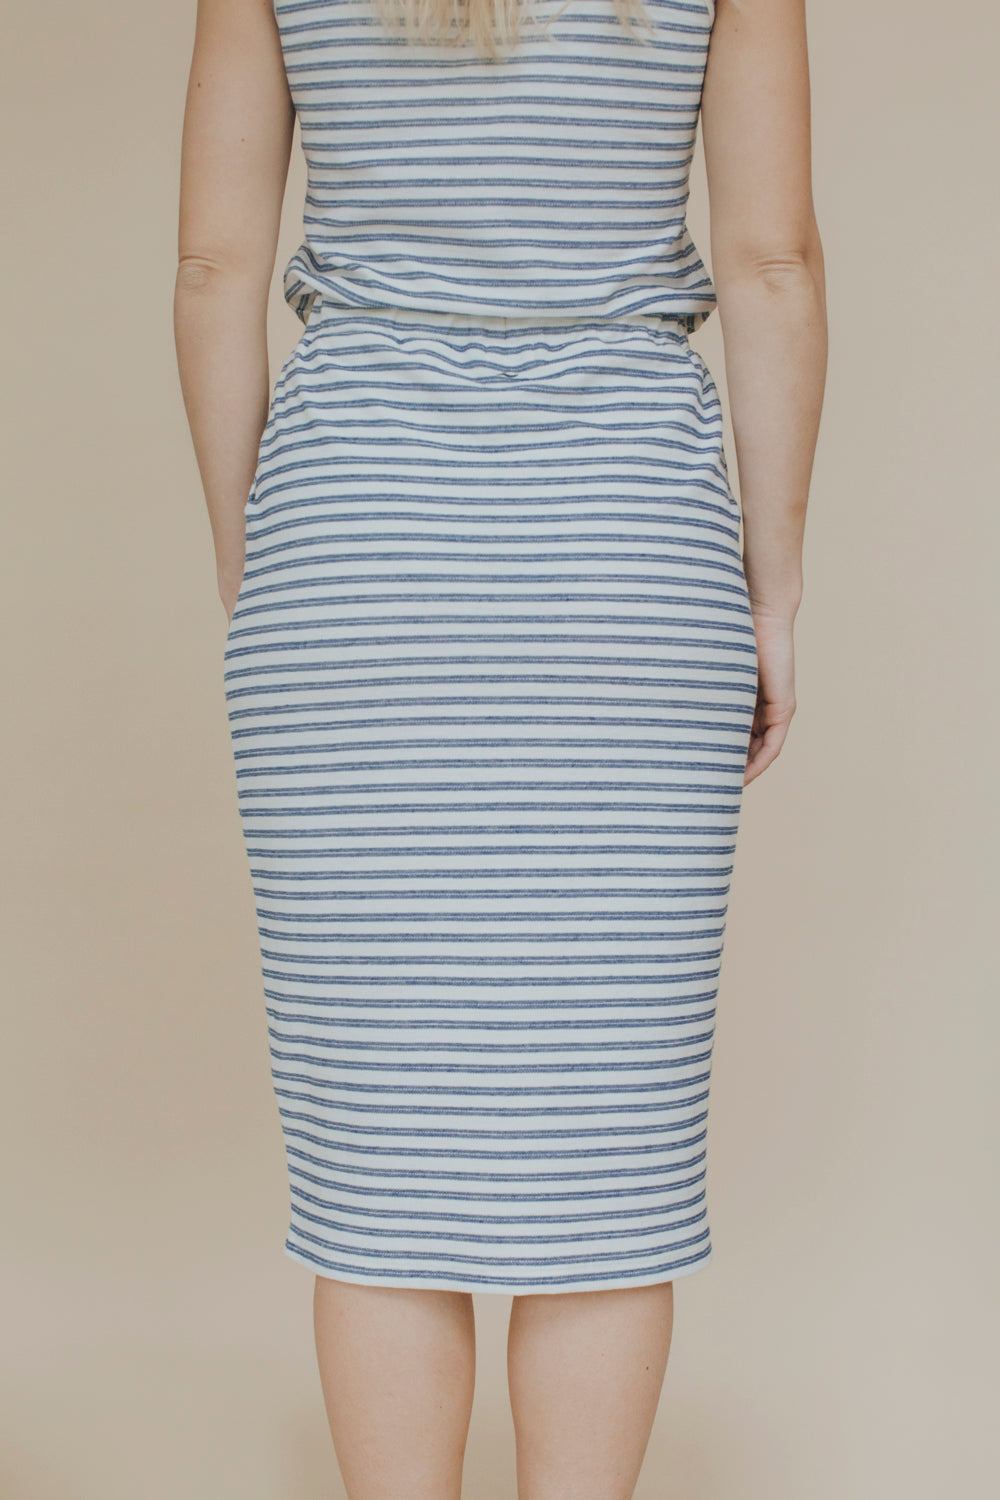 the dão store - Skirt Olivia - Greek Stripes - Skirts | Dresses